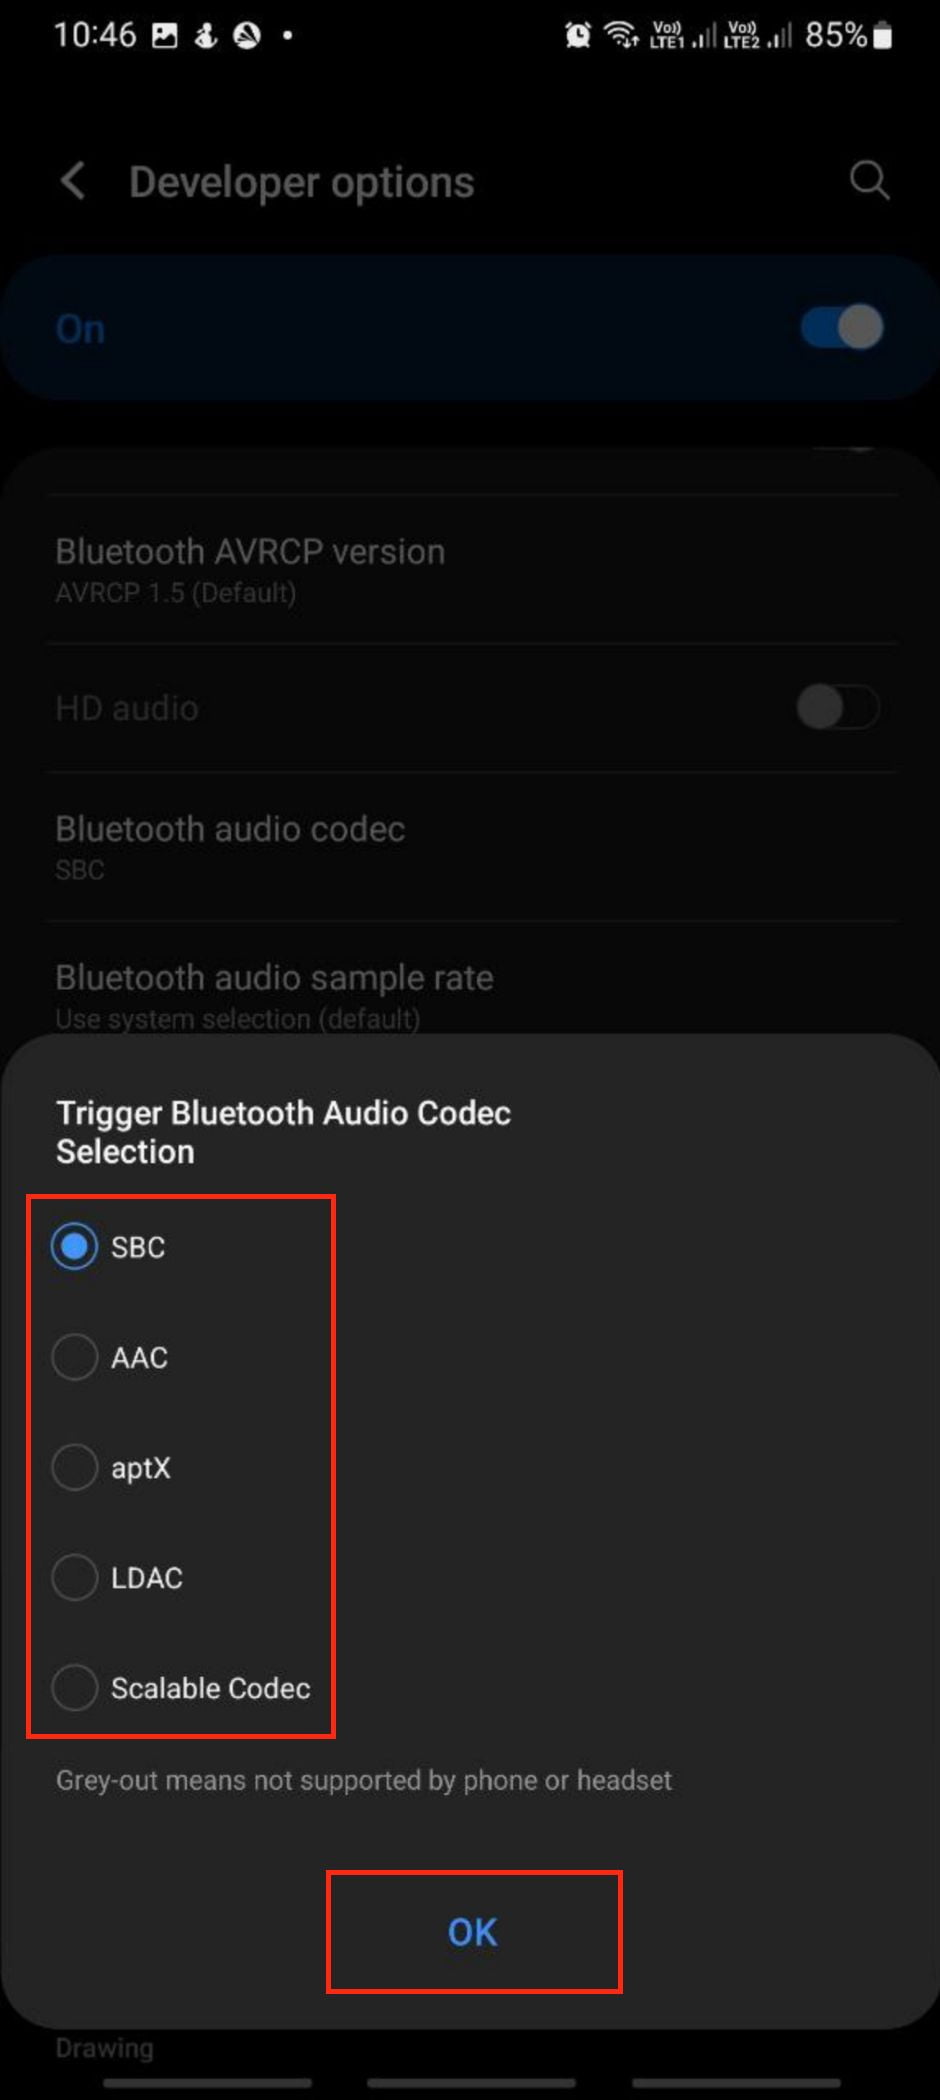 Scroll down a bit far and find the Bluetooth audio codec.